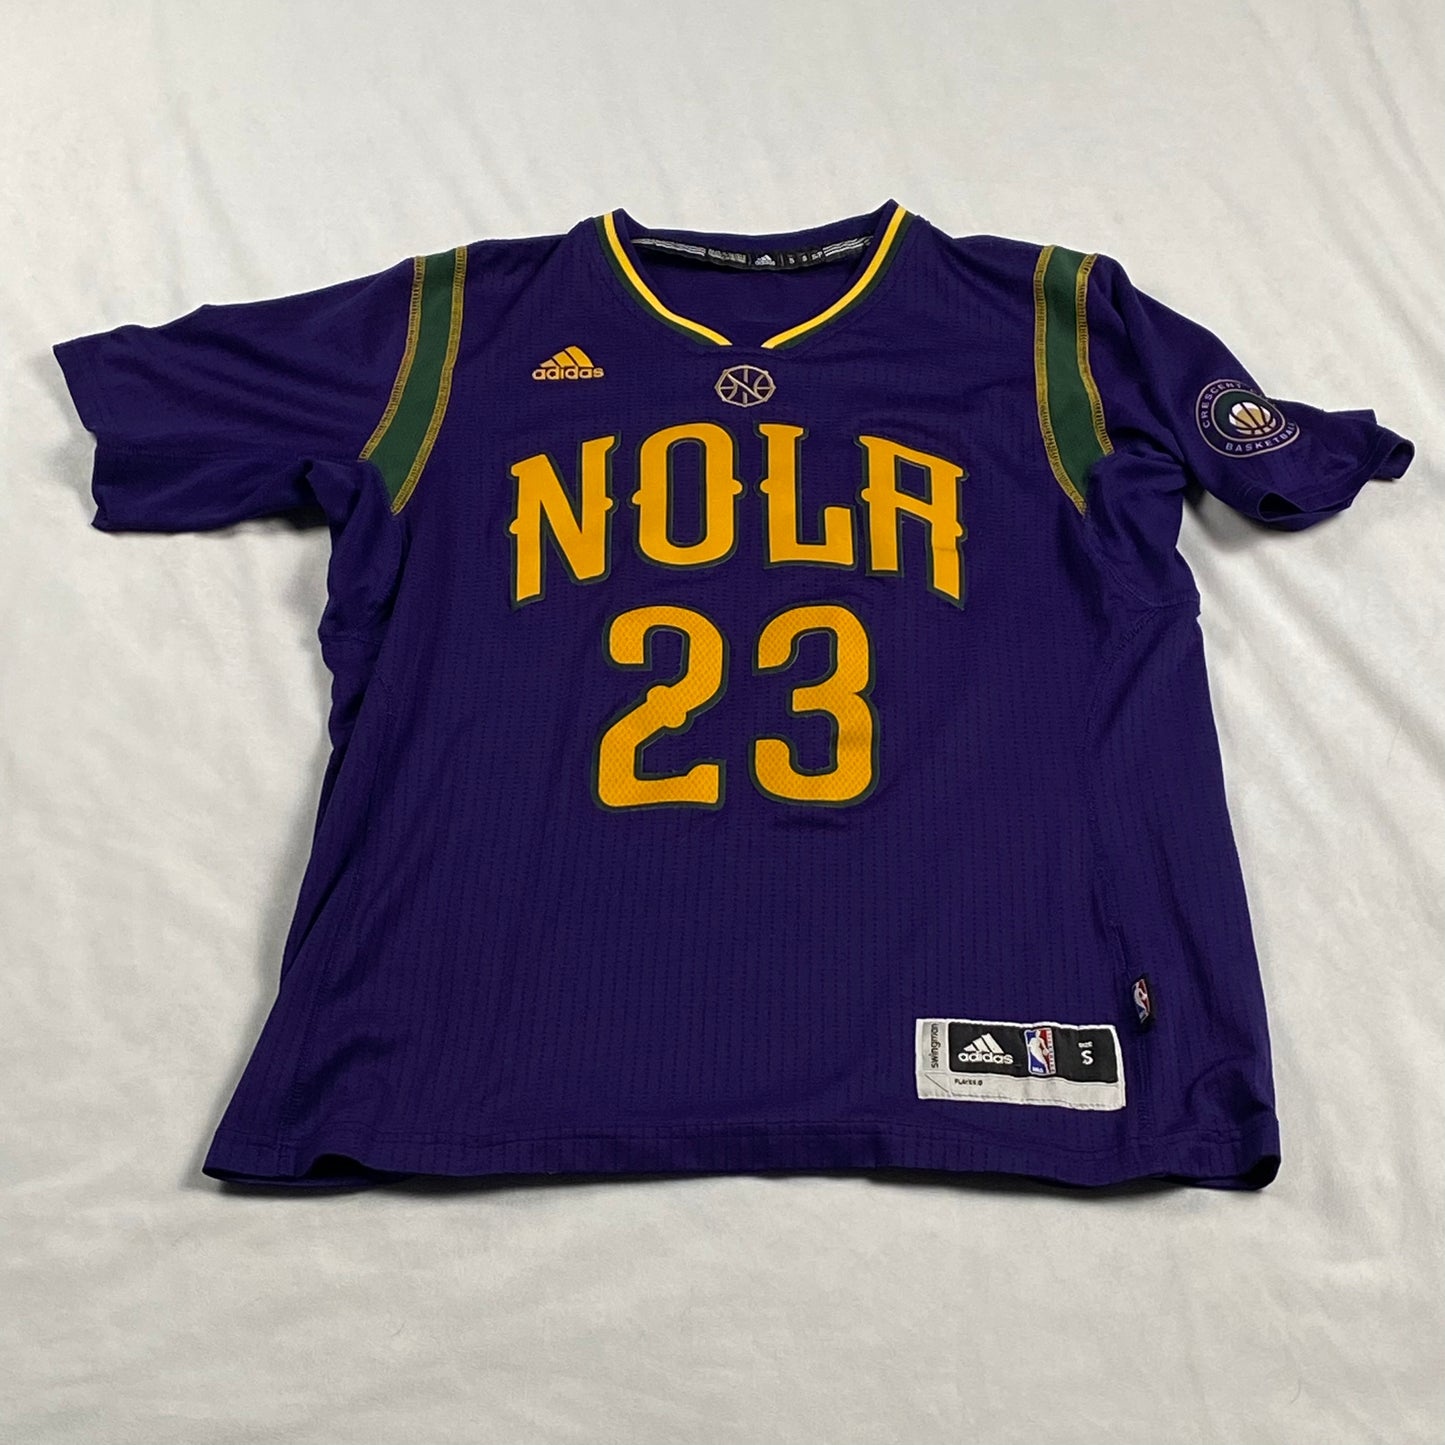 New Orleans Pelicans Anthony Davis Adidas Swingman Sleeved NBA Basketball Jersey